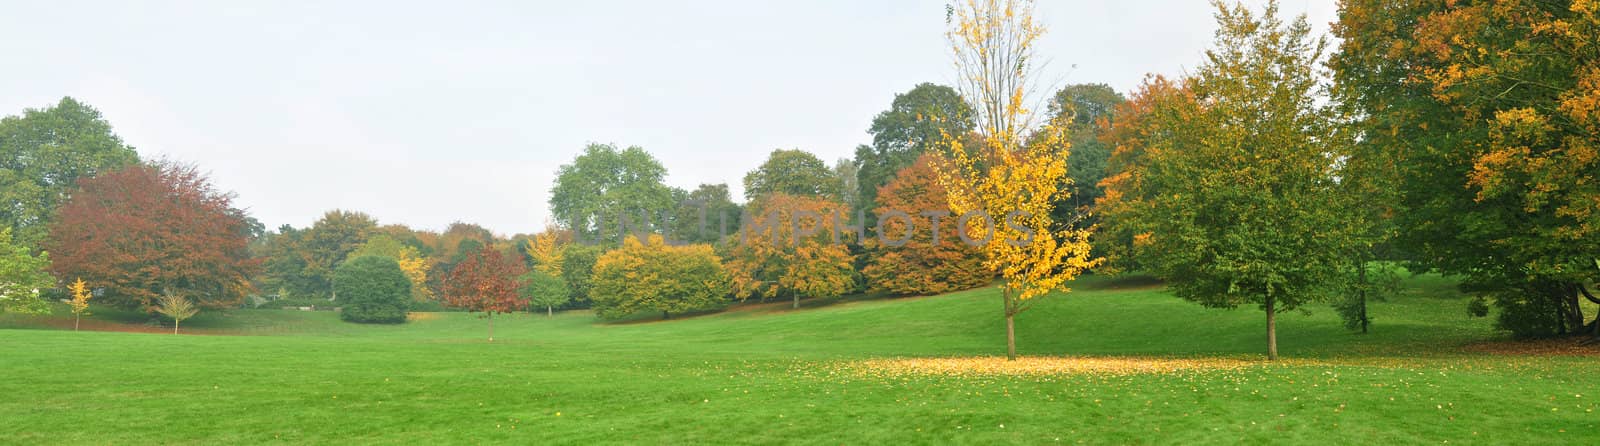 autumn english landscape in London England panorama image